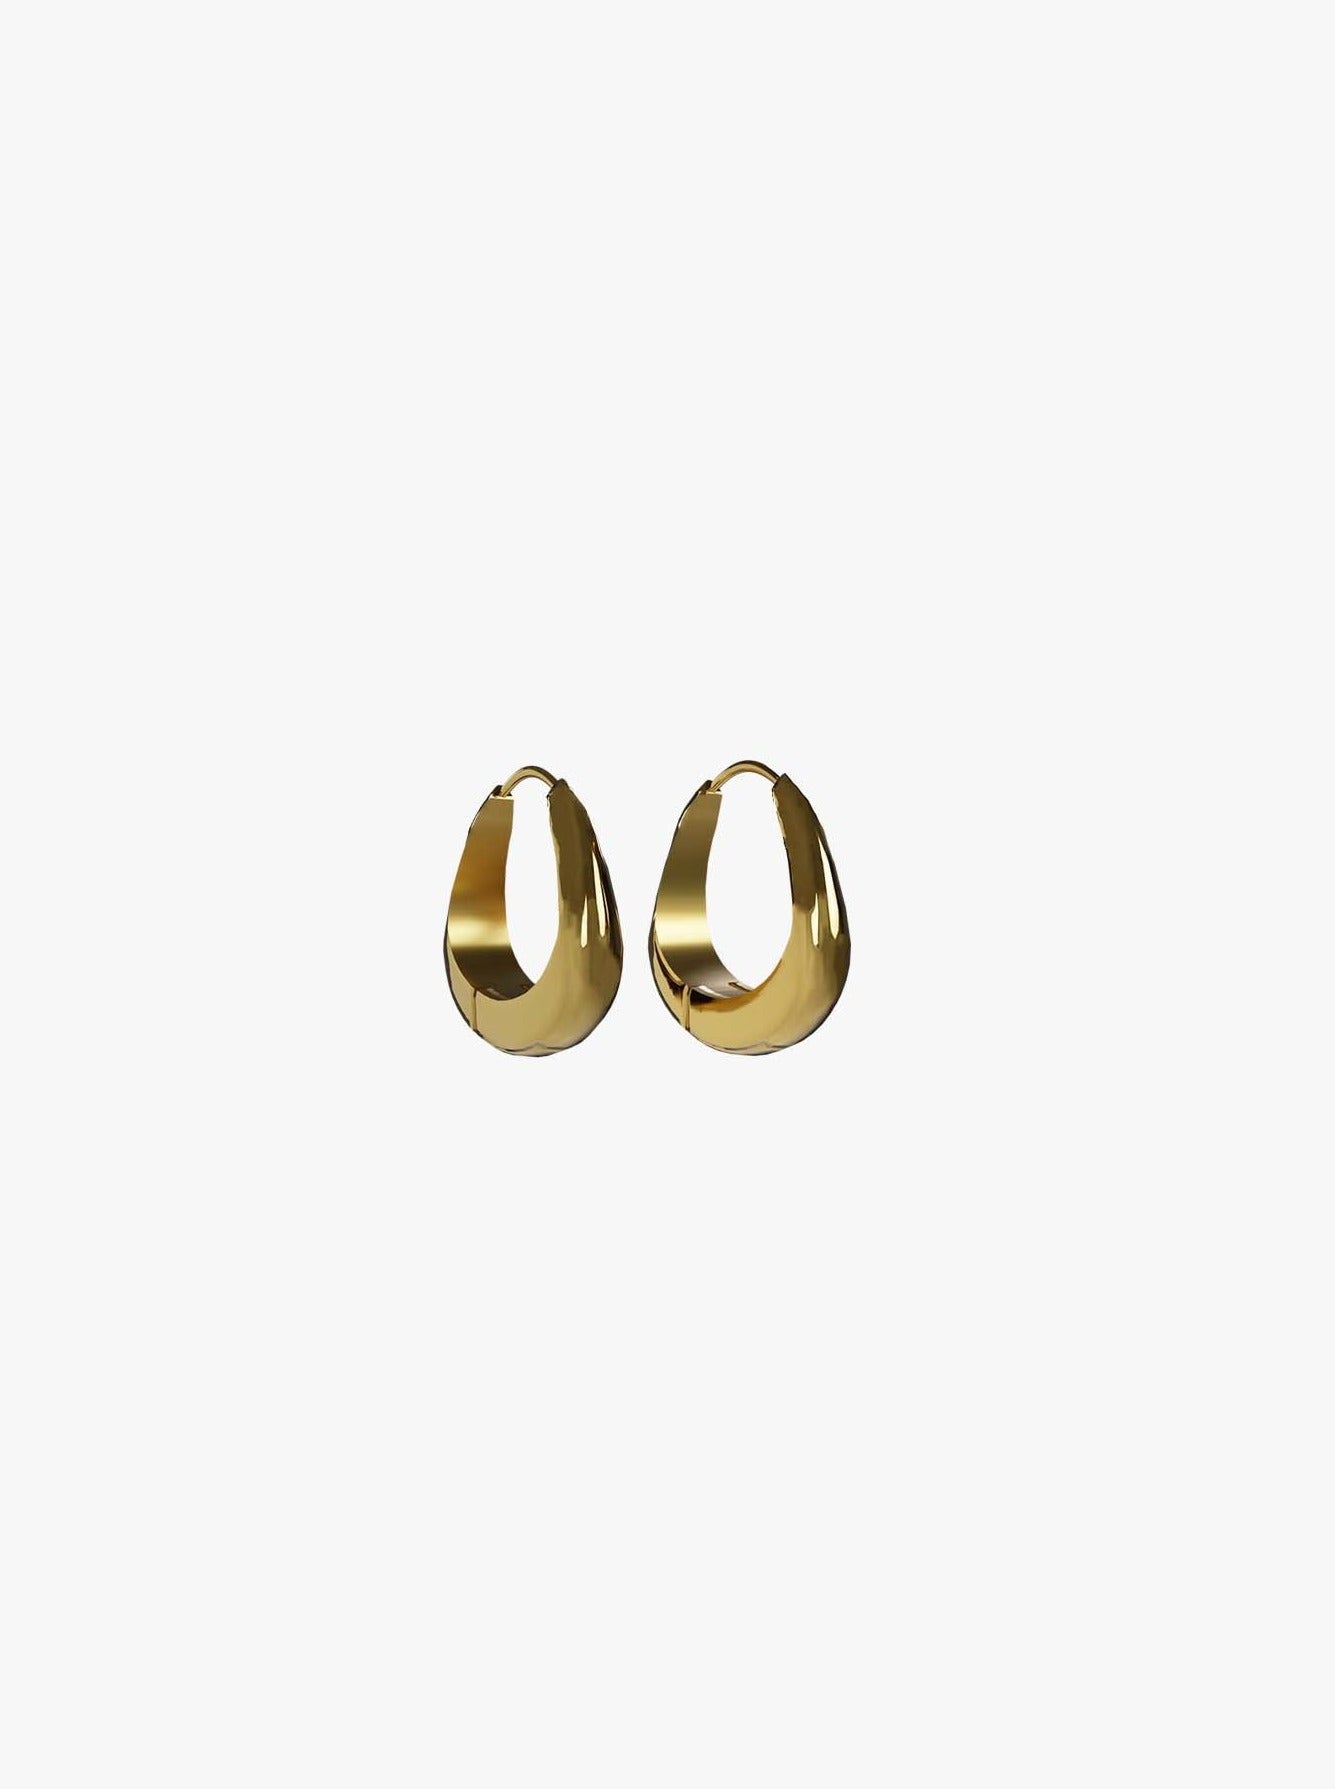 Riz gold earrings (pair)